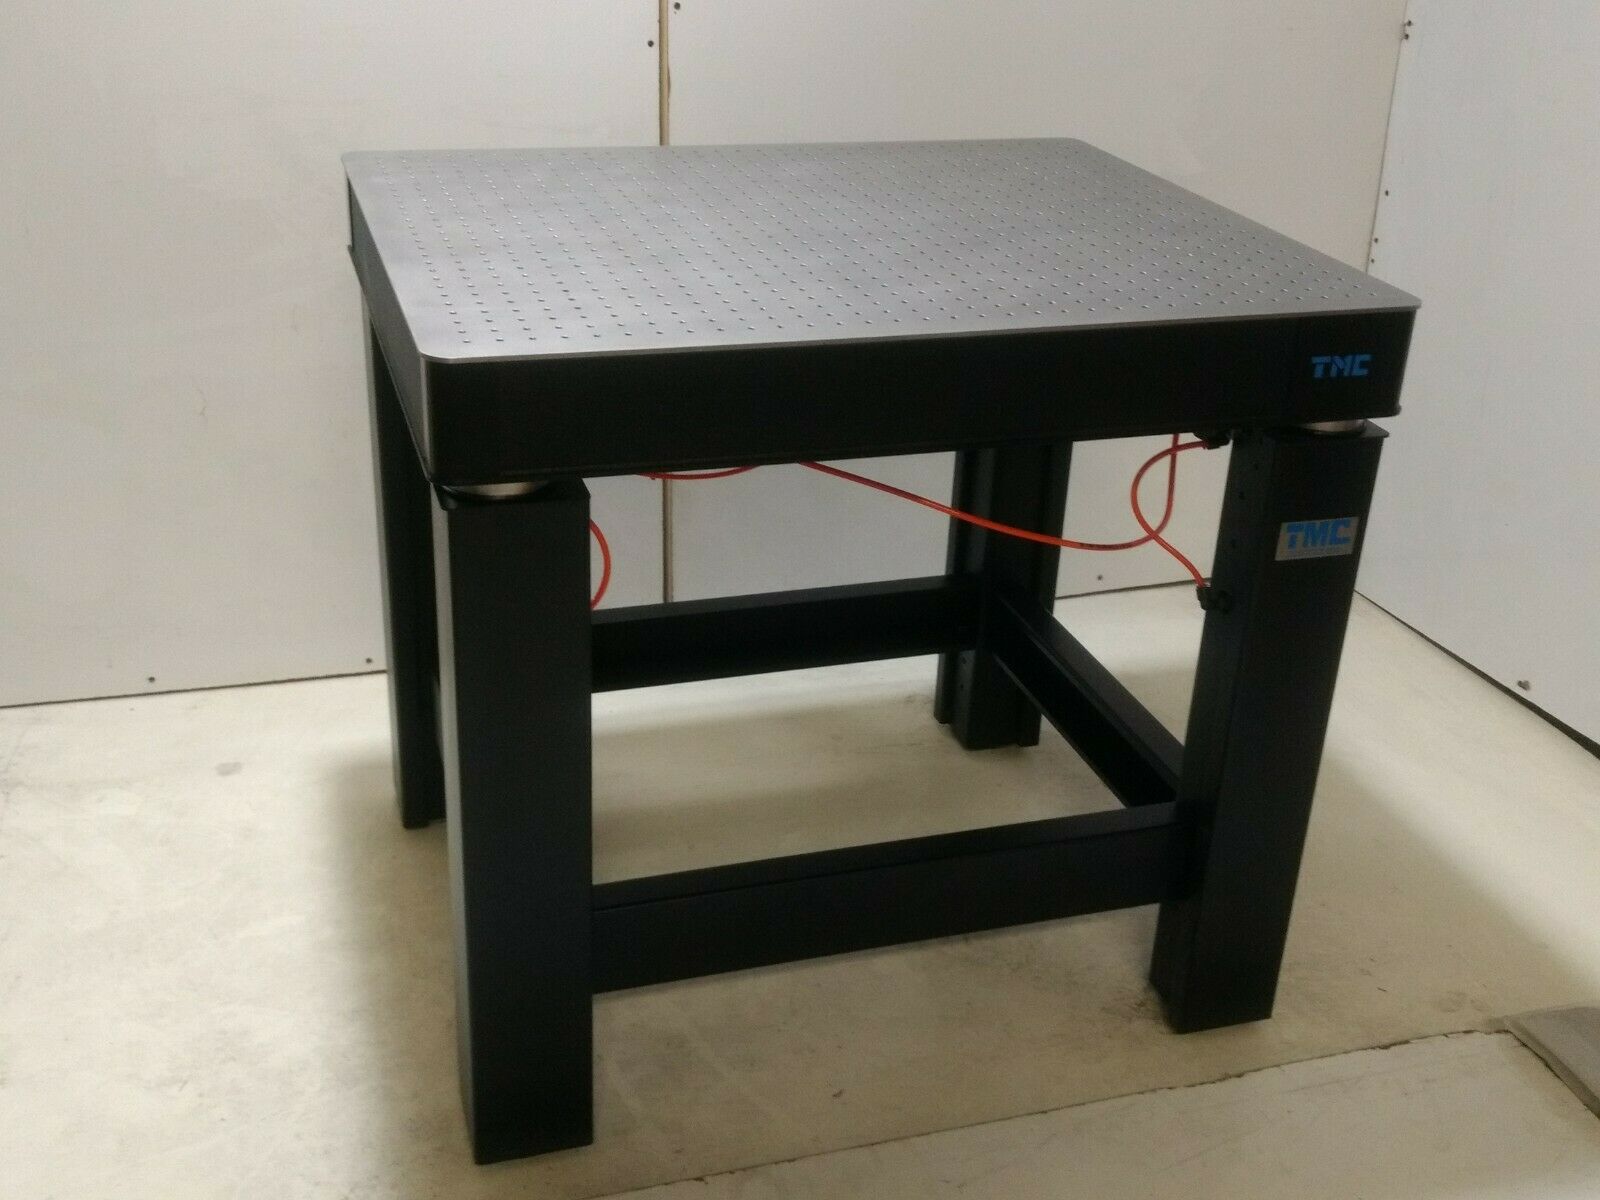 Tested Tmc 29" X 35" Optical Breadboard Table, Pneumatic Isolators W/ Tie Bar